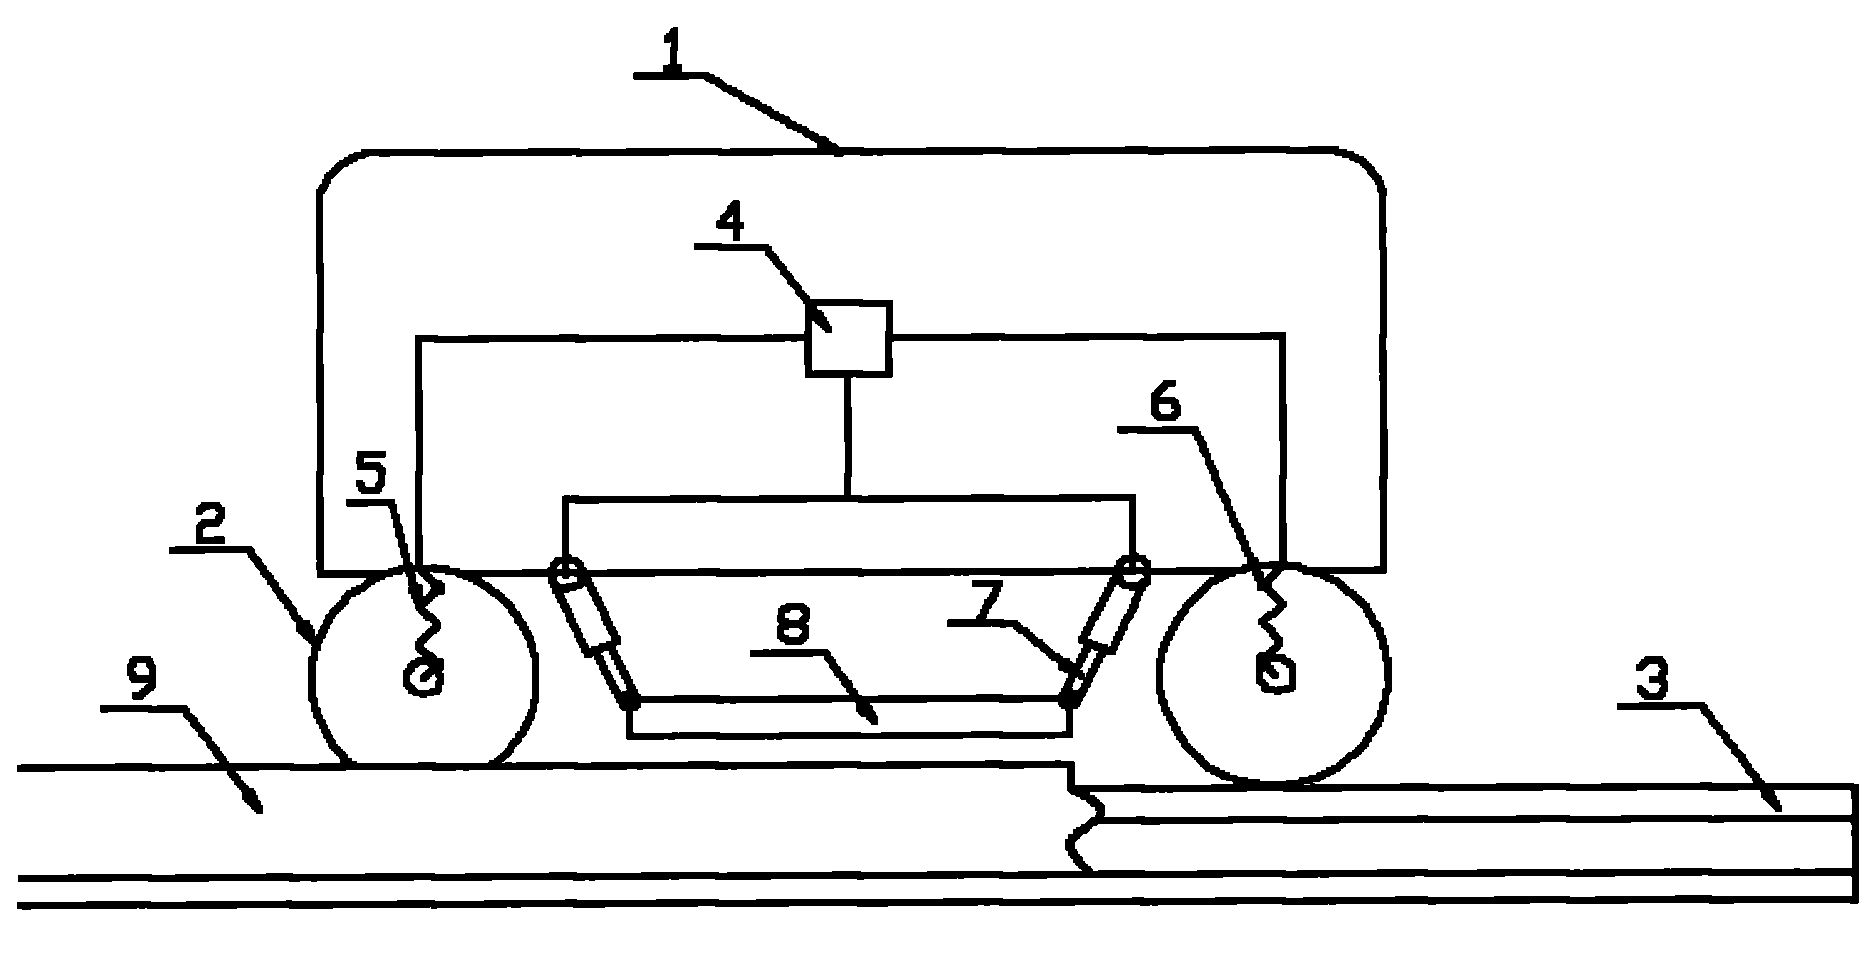 Semi-magnetic suspension type vehicle